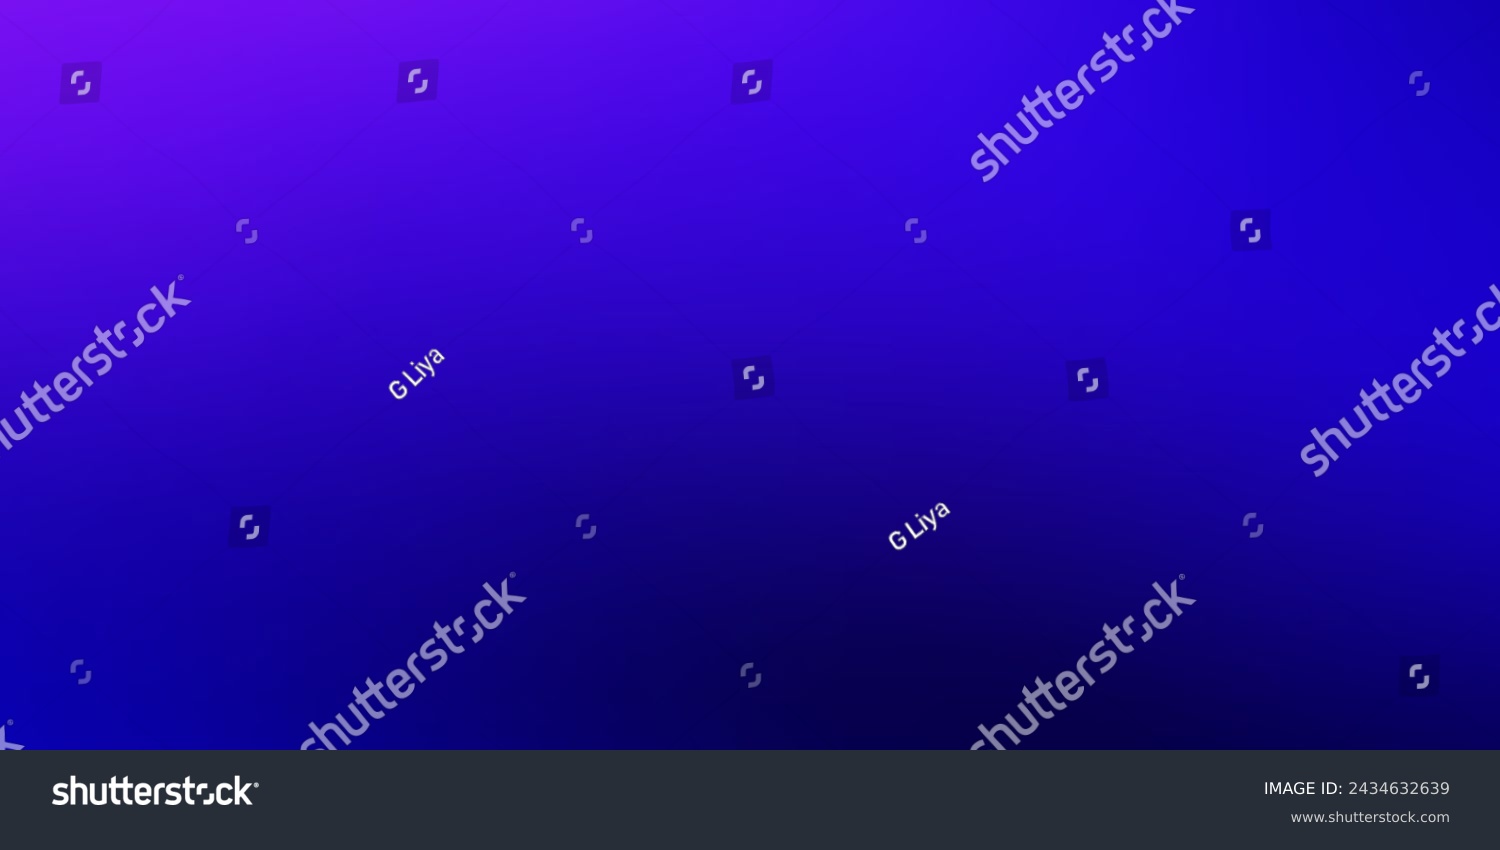 Dark Pink, Blue vector modern blurred background. Elegant bright illustration with gradient. Design for landing pages. #2434632639